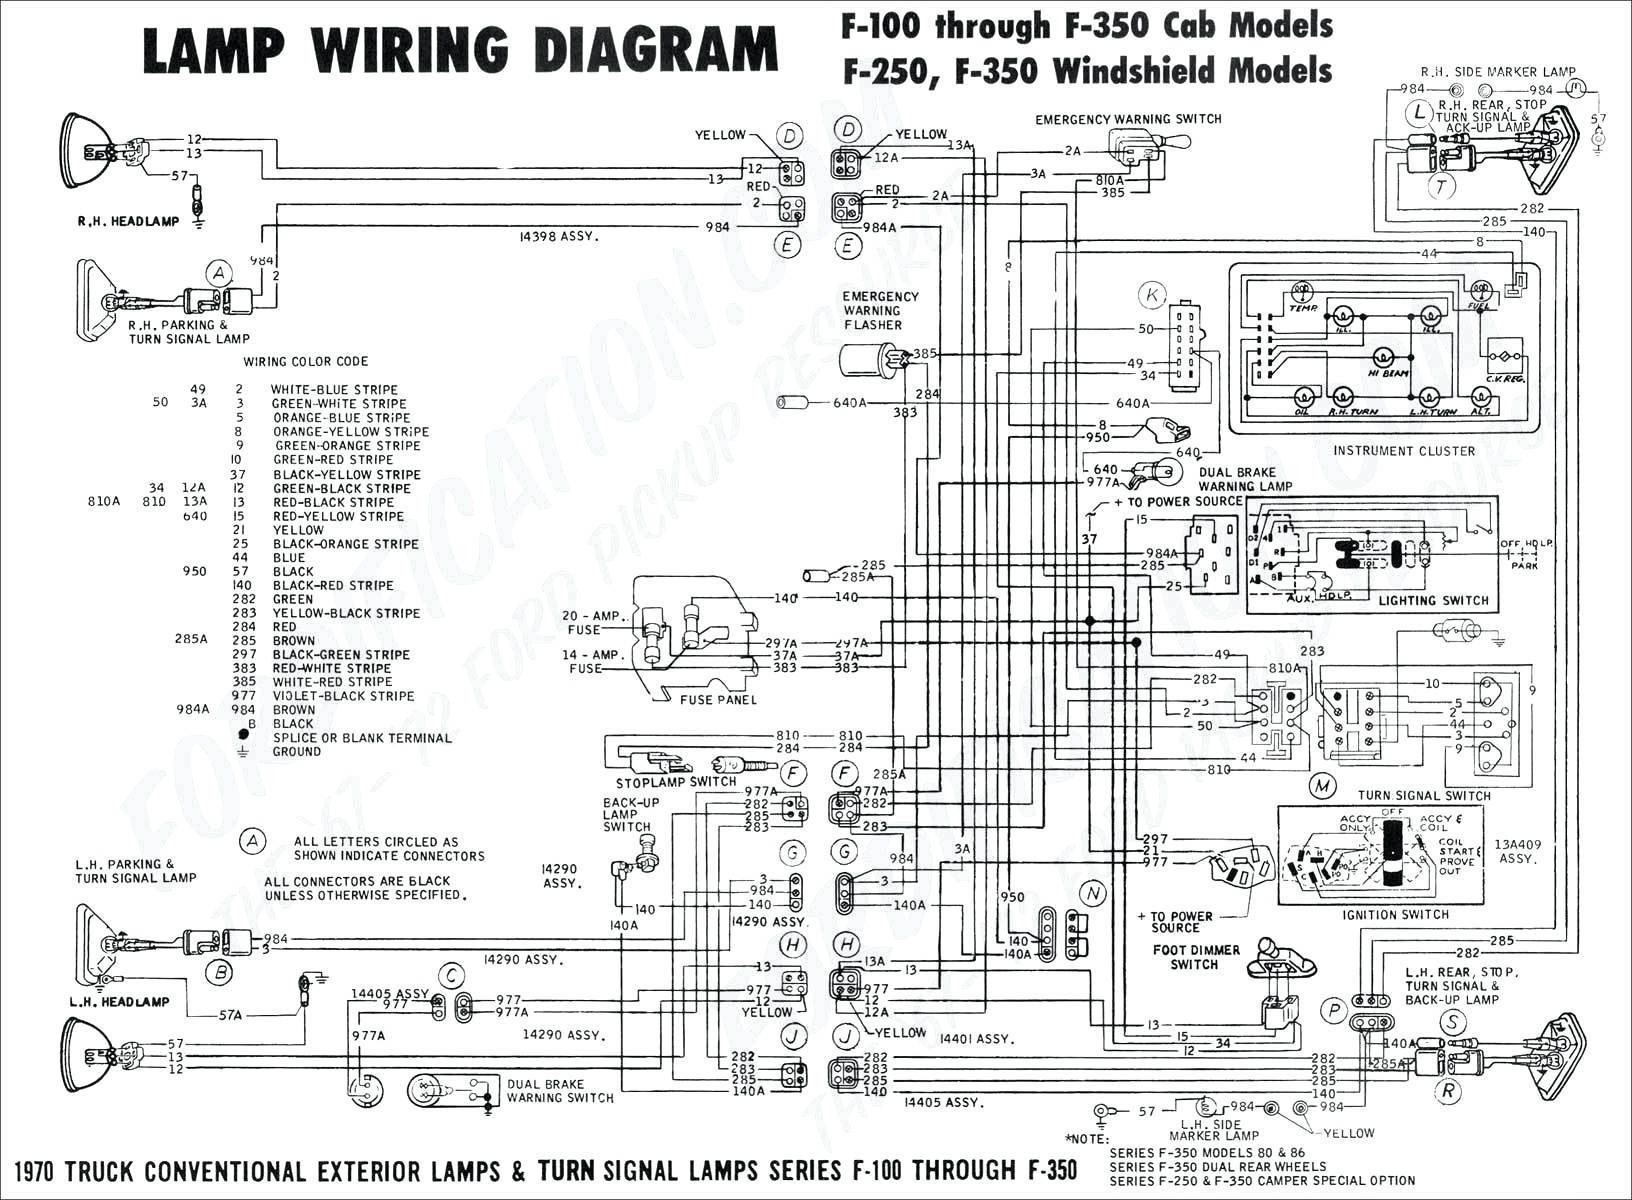 Wiring Diagram for Hopkins Trailer Plug Print 7 Blade Wiring Diagram Hopkins Trailer and Groun Breaking – Wiring